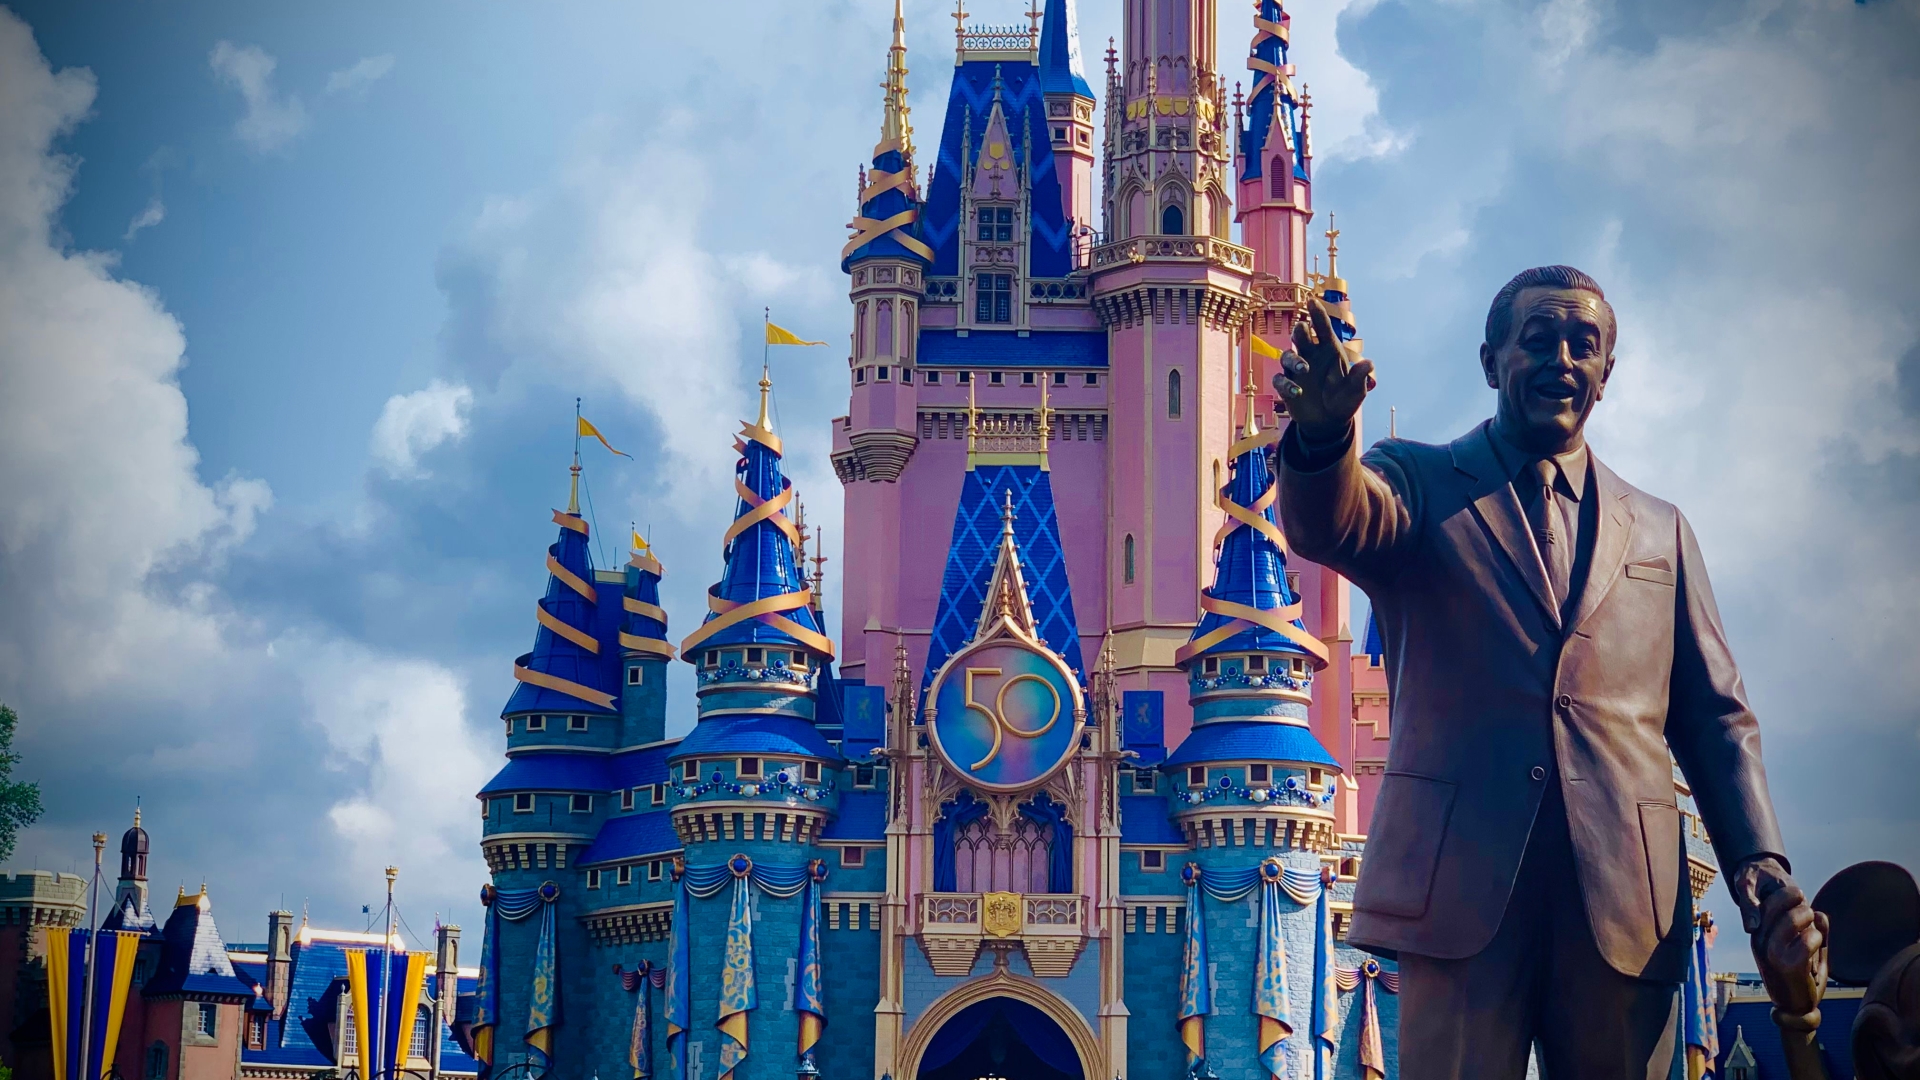 Cinderella Castle: The heart of Walt Disney's dream come true